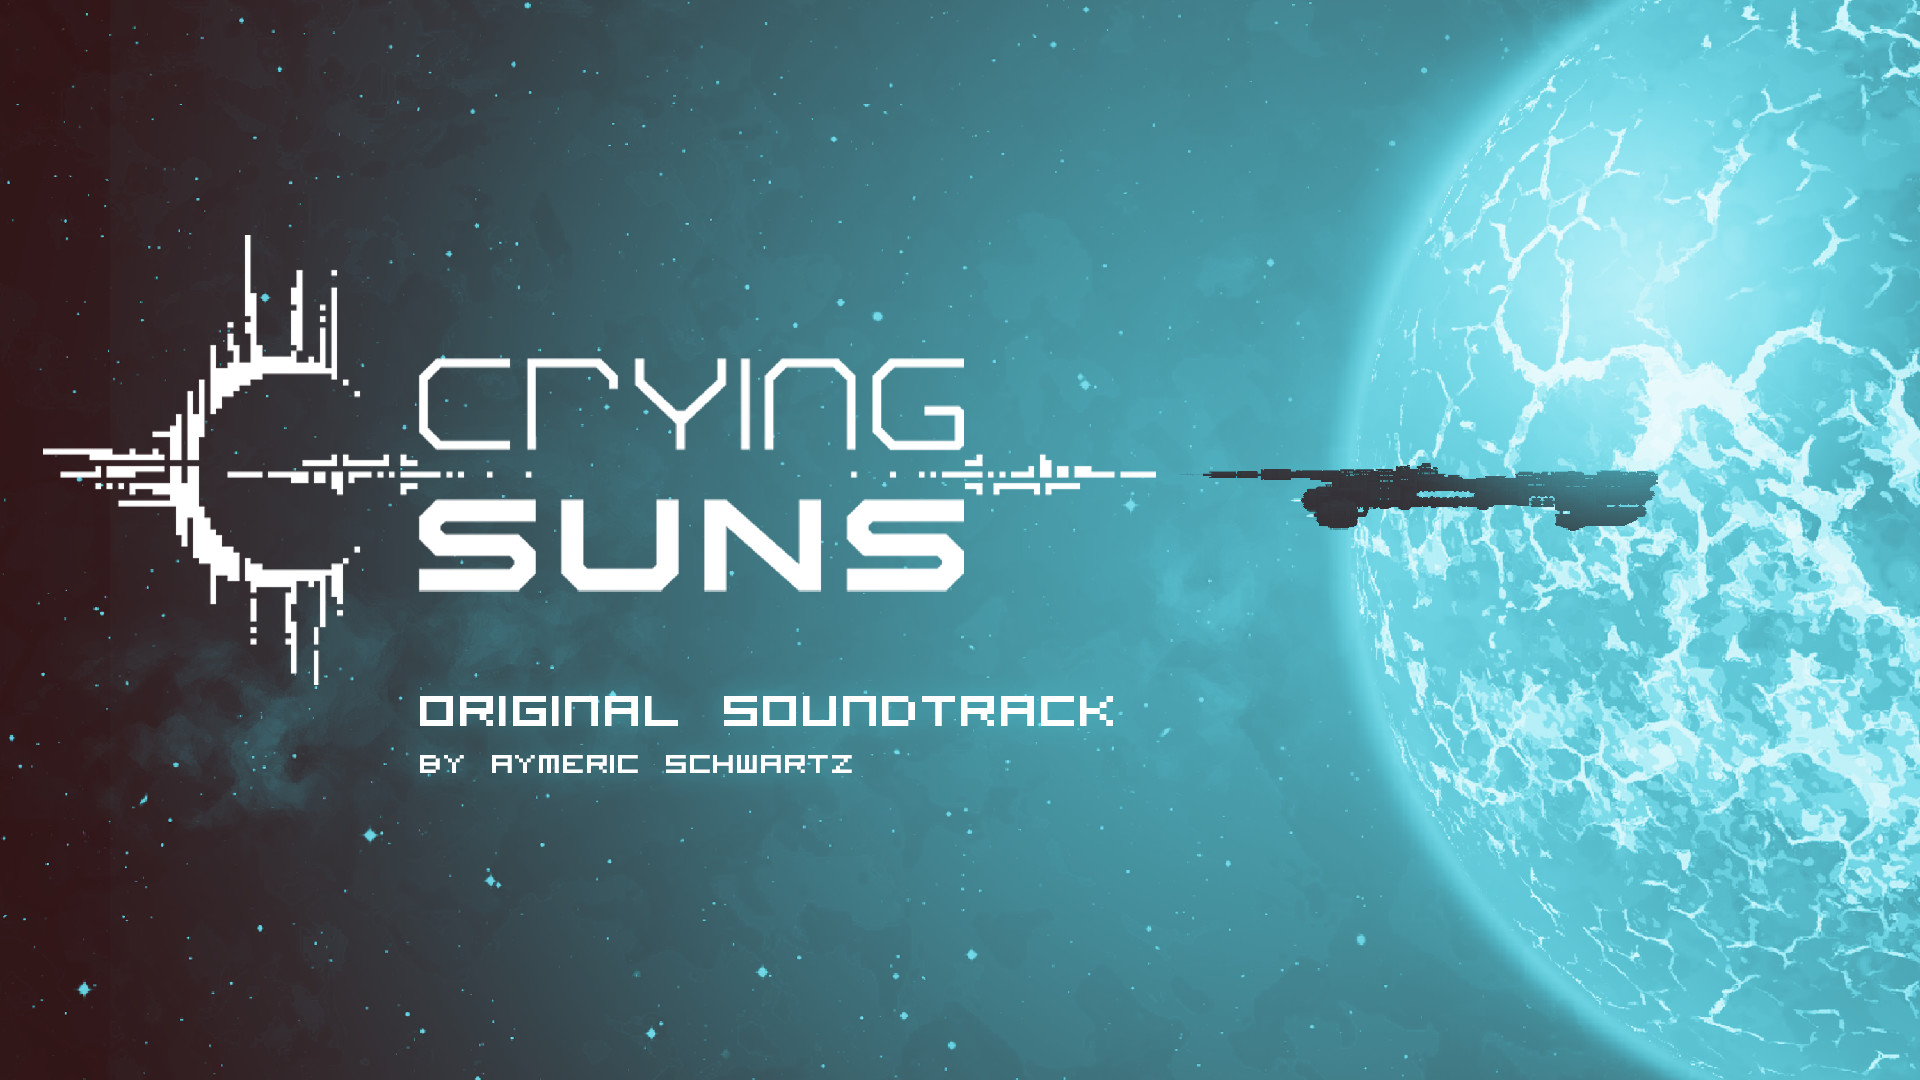 Crying Suns - Original Soundtrack Featured Screenshot #1